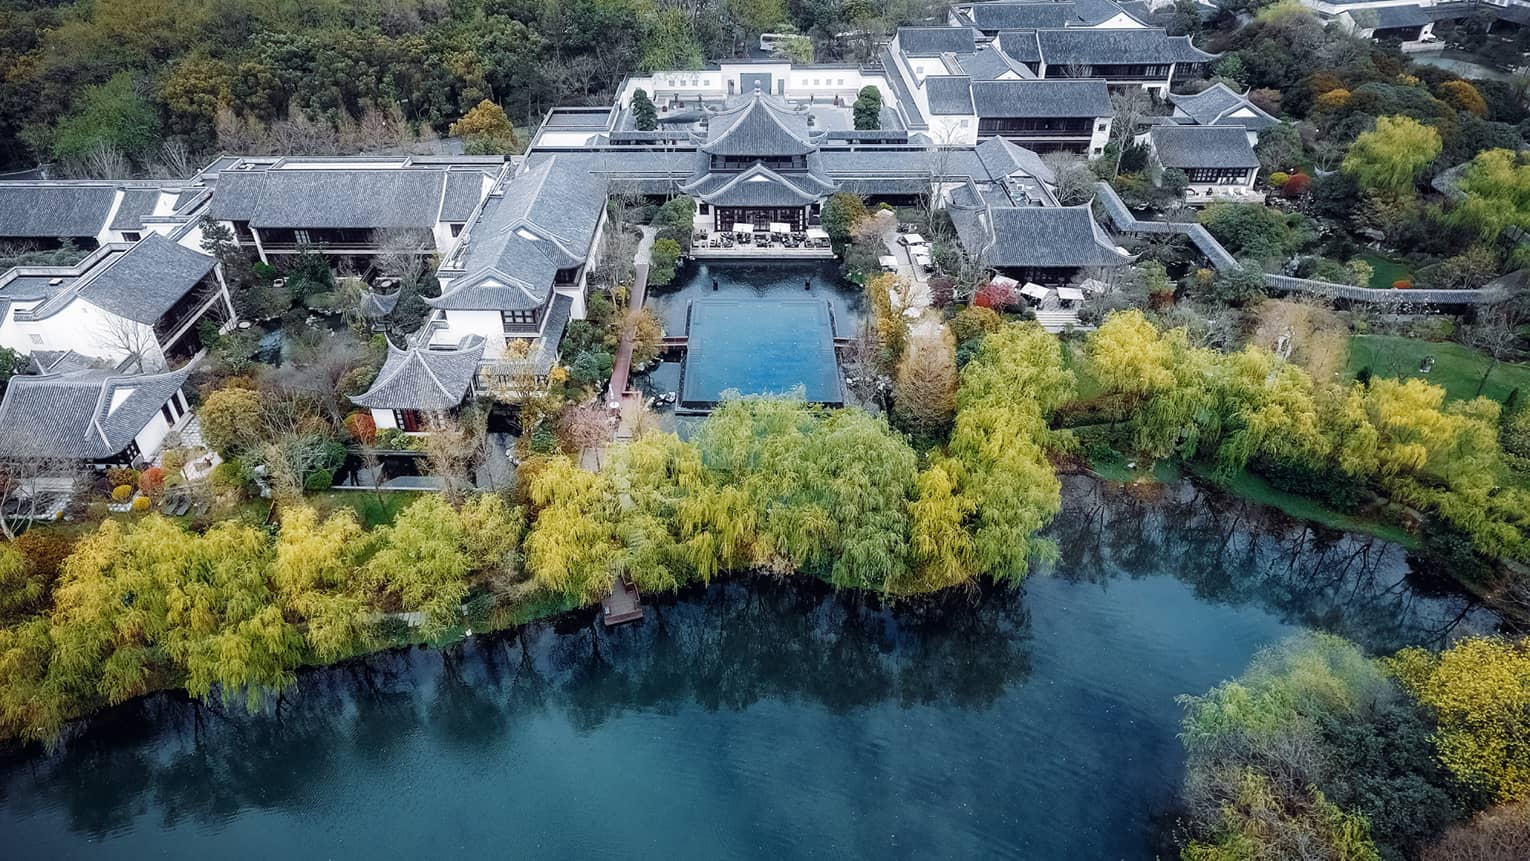 Aerial view of Four Seasons Hotel Hangzhou village-like resort on water